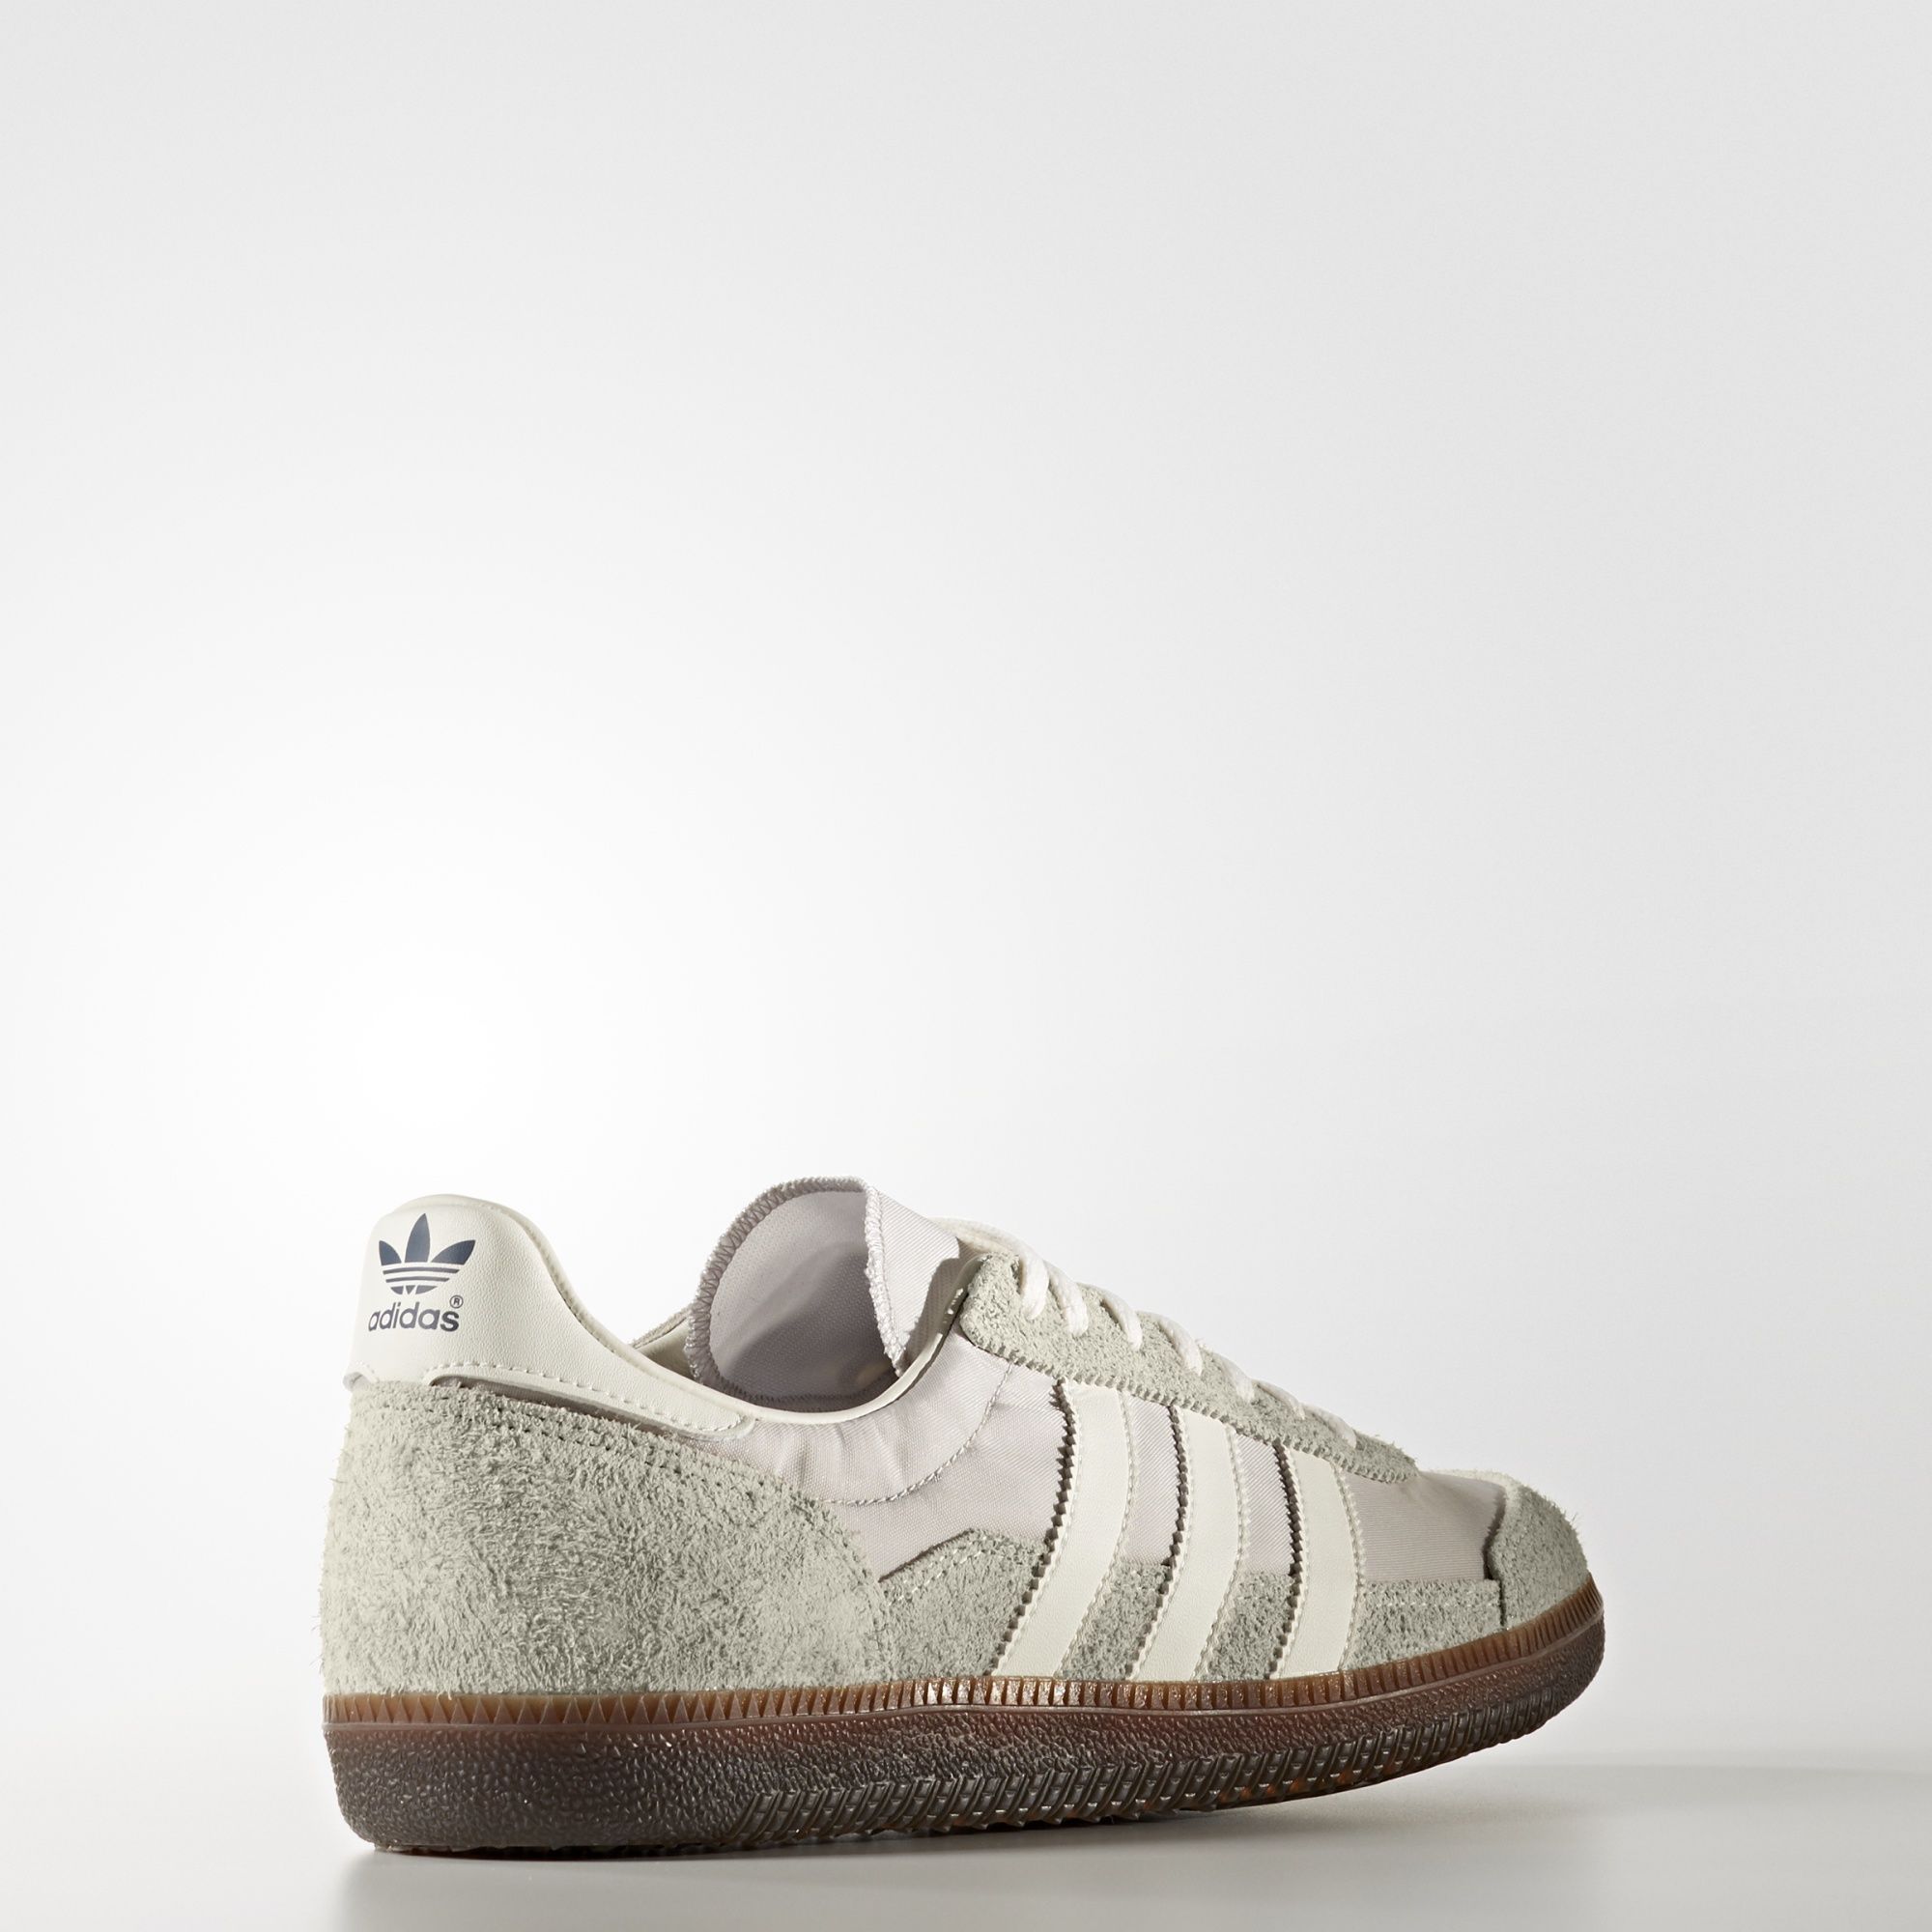 Adidas SPZL Wensley
Clear Granite / Off White